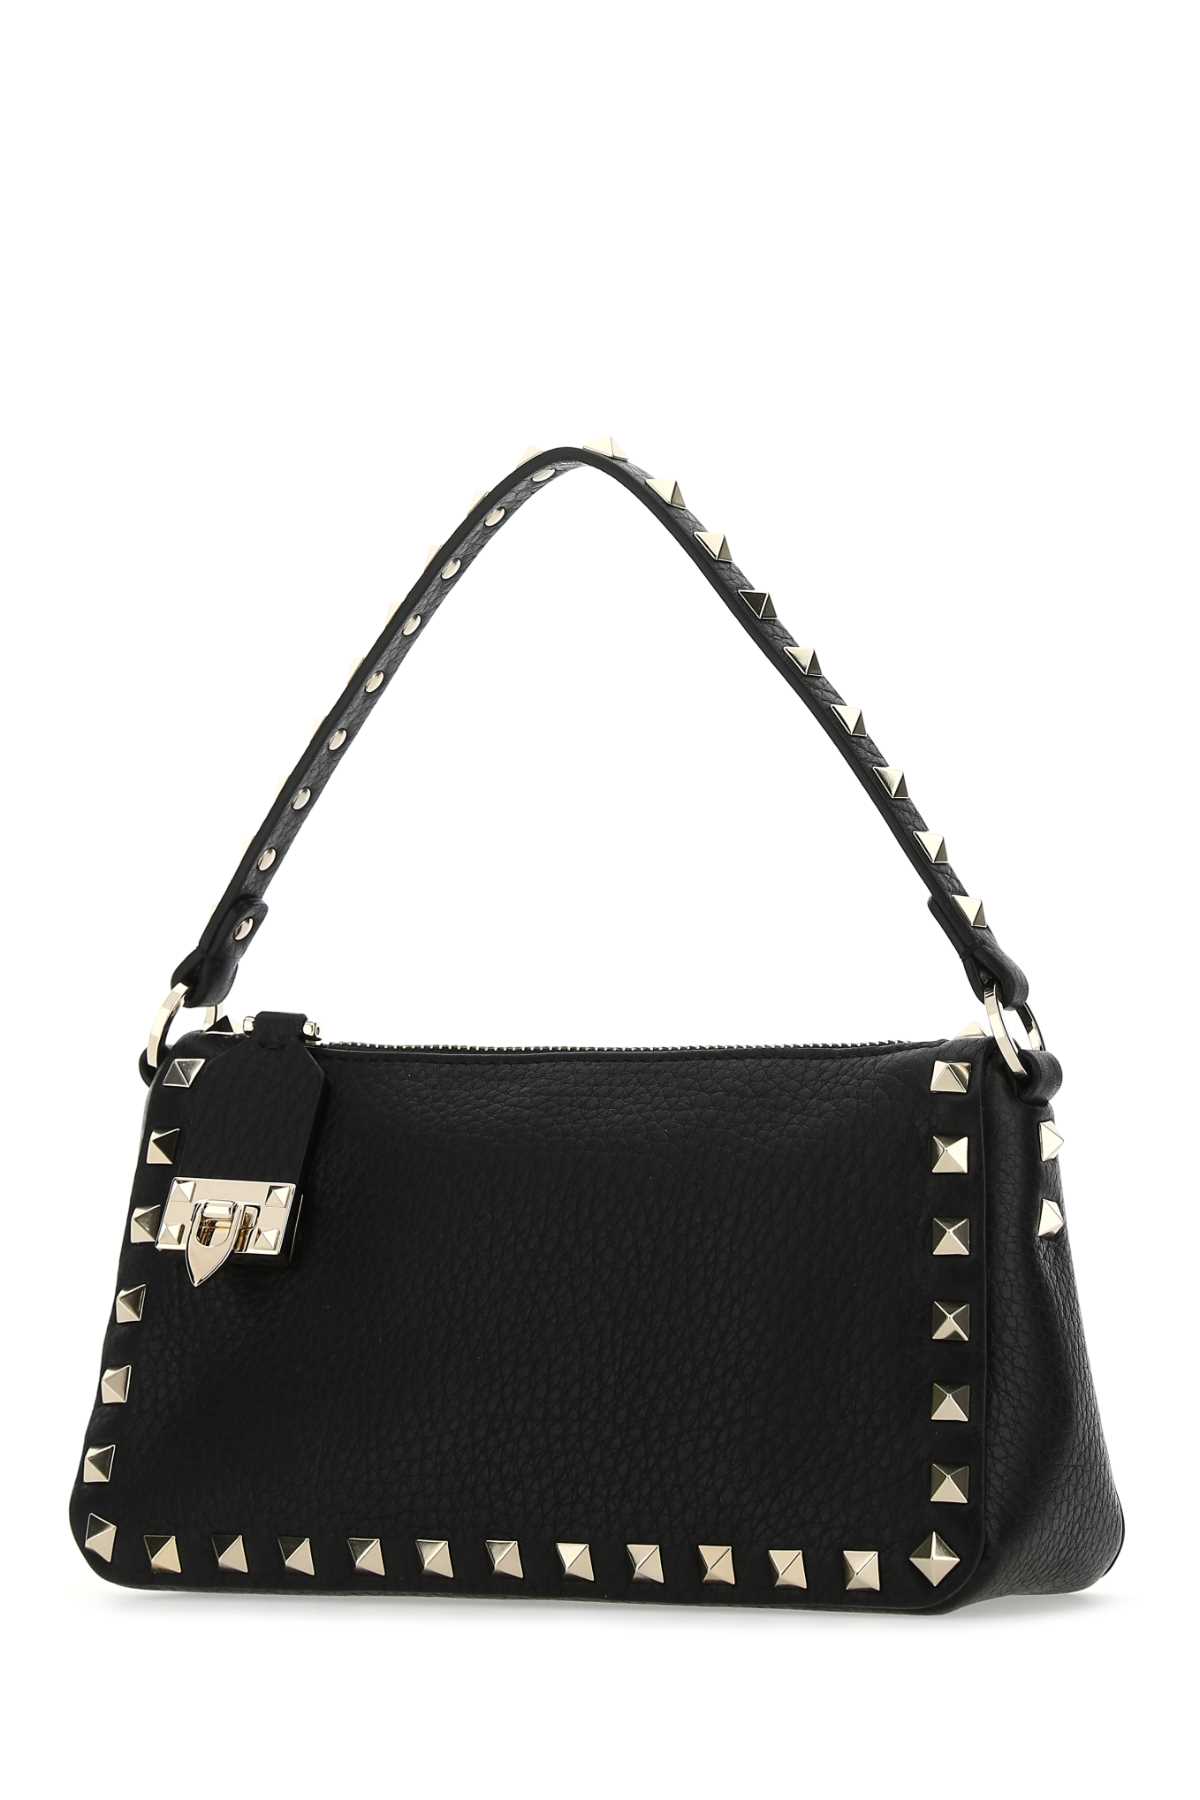 Valentino Garavani Black Leather Small Rockstud Handbag In Nero